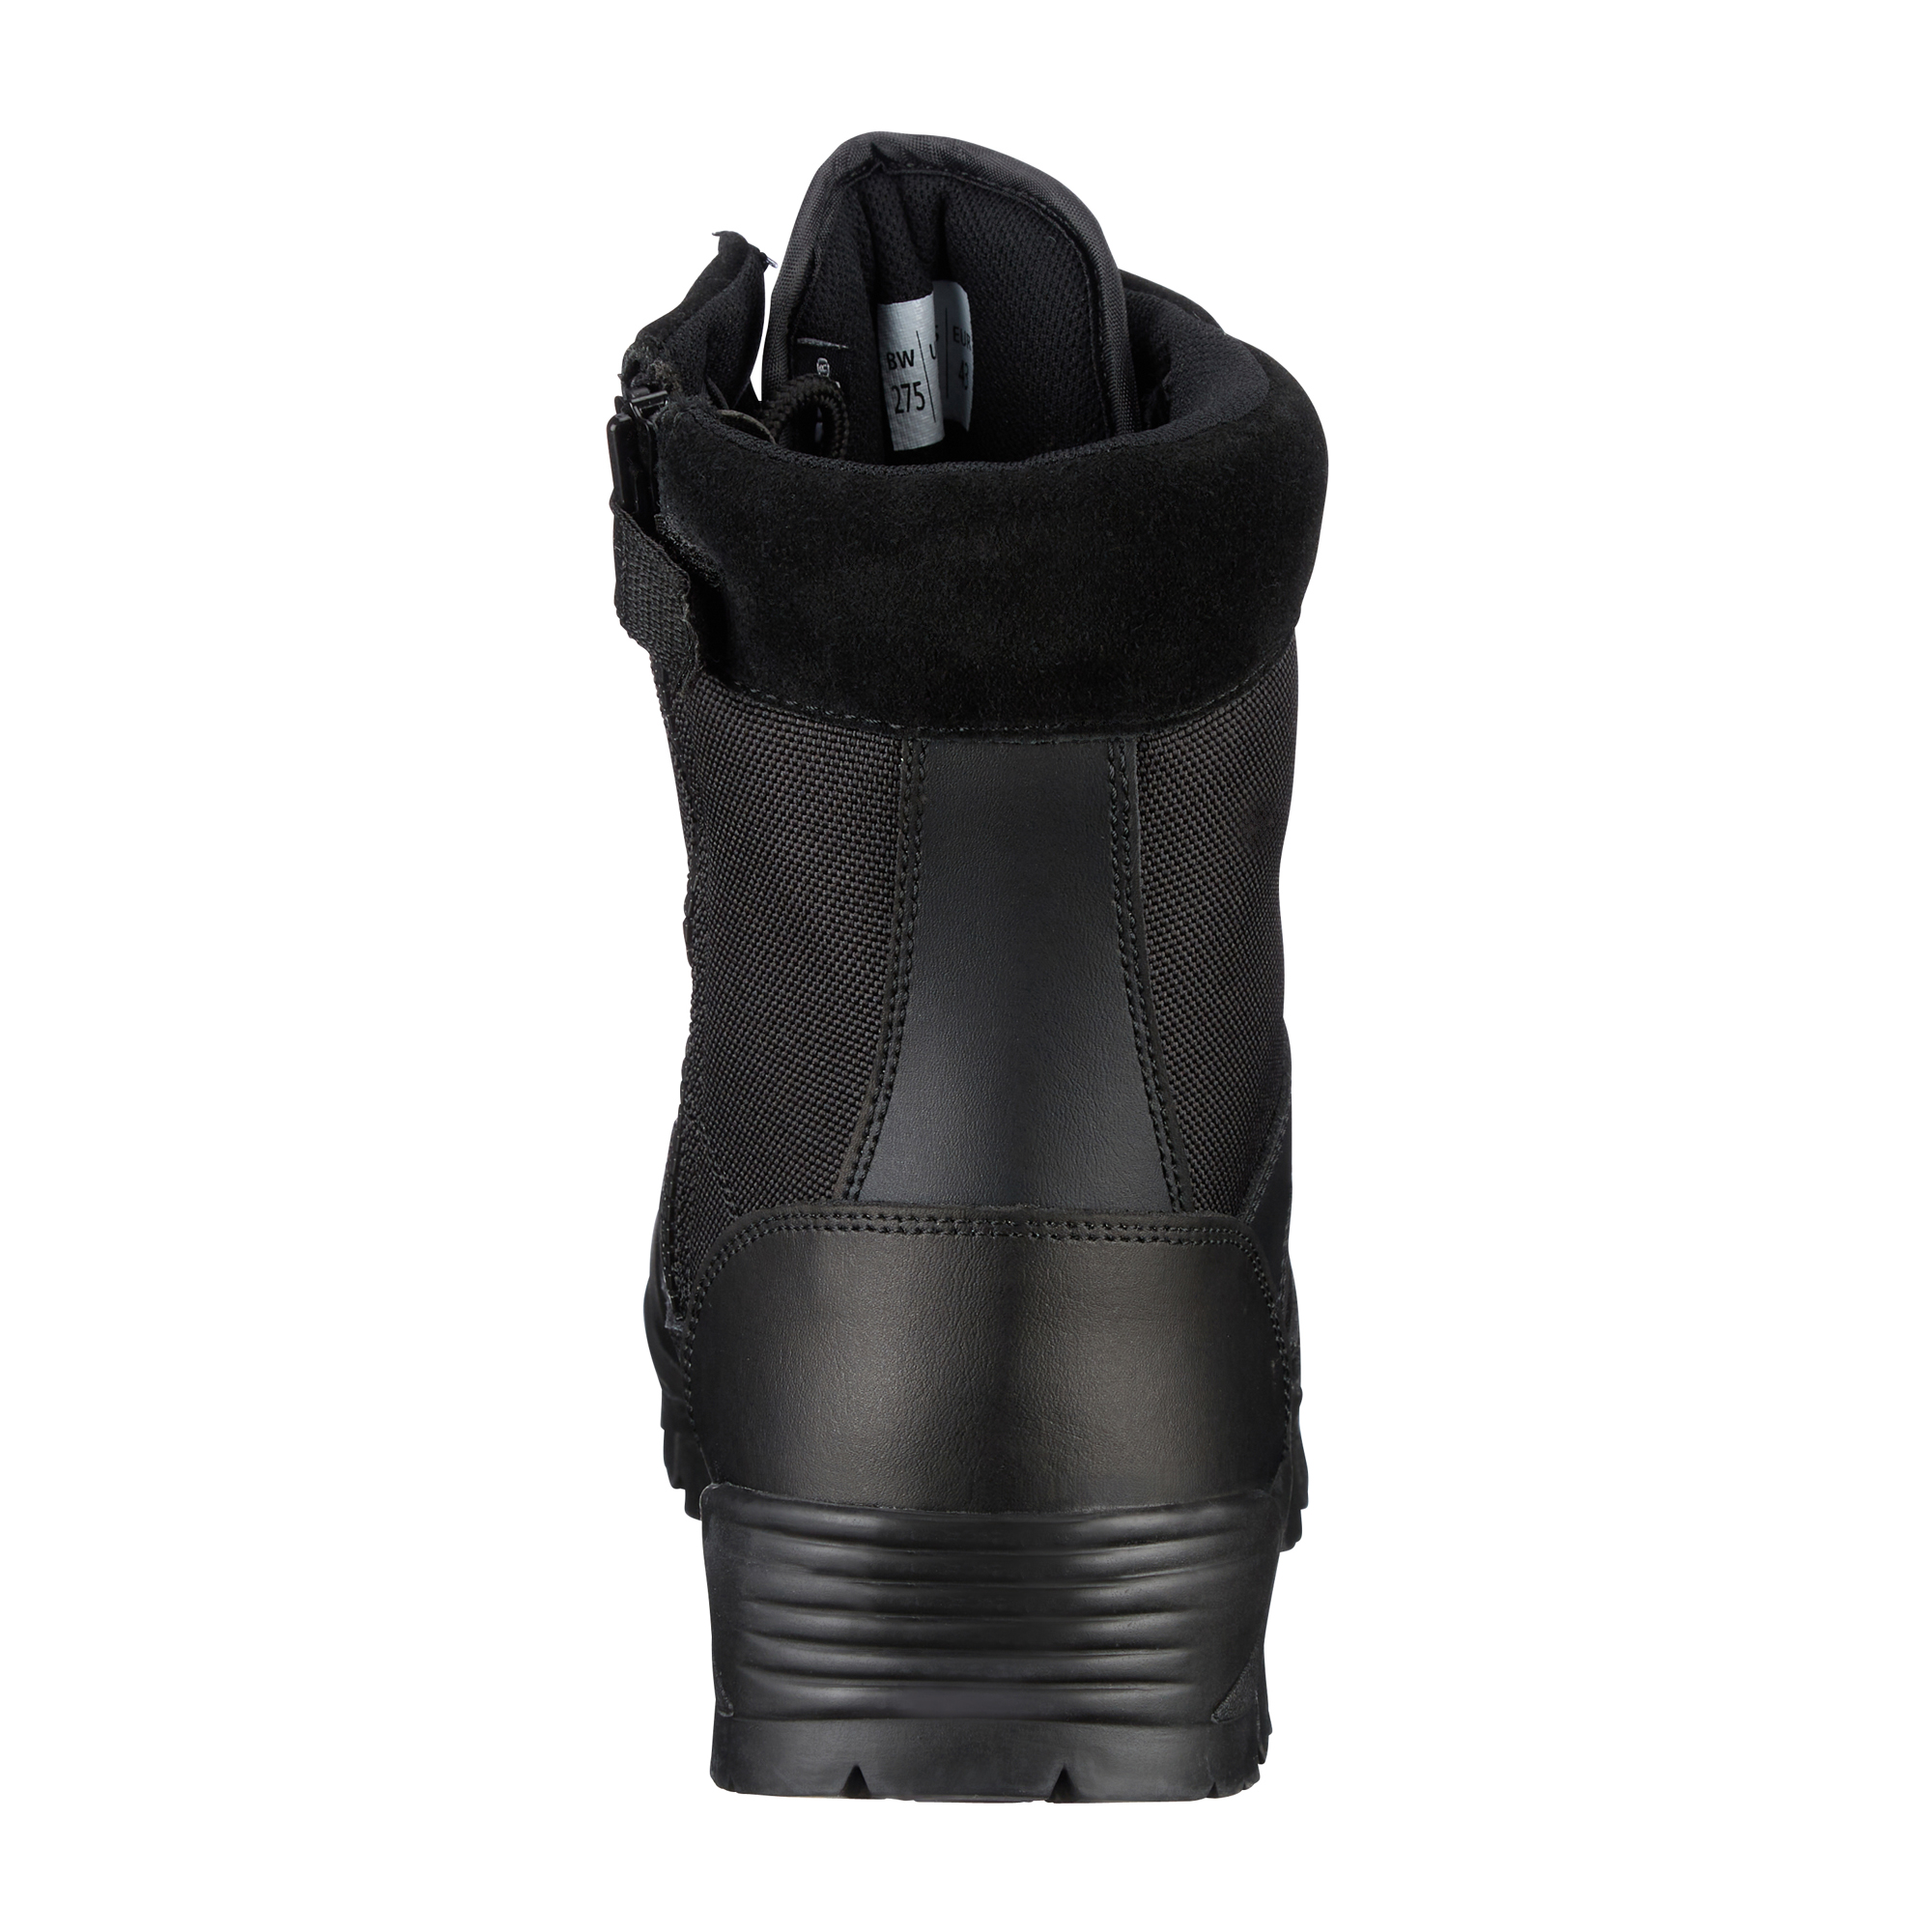 NEU US Thinsulate Tactical Stiefel Security SWAT BOOT Türsteher schwarz 37-50 